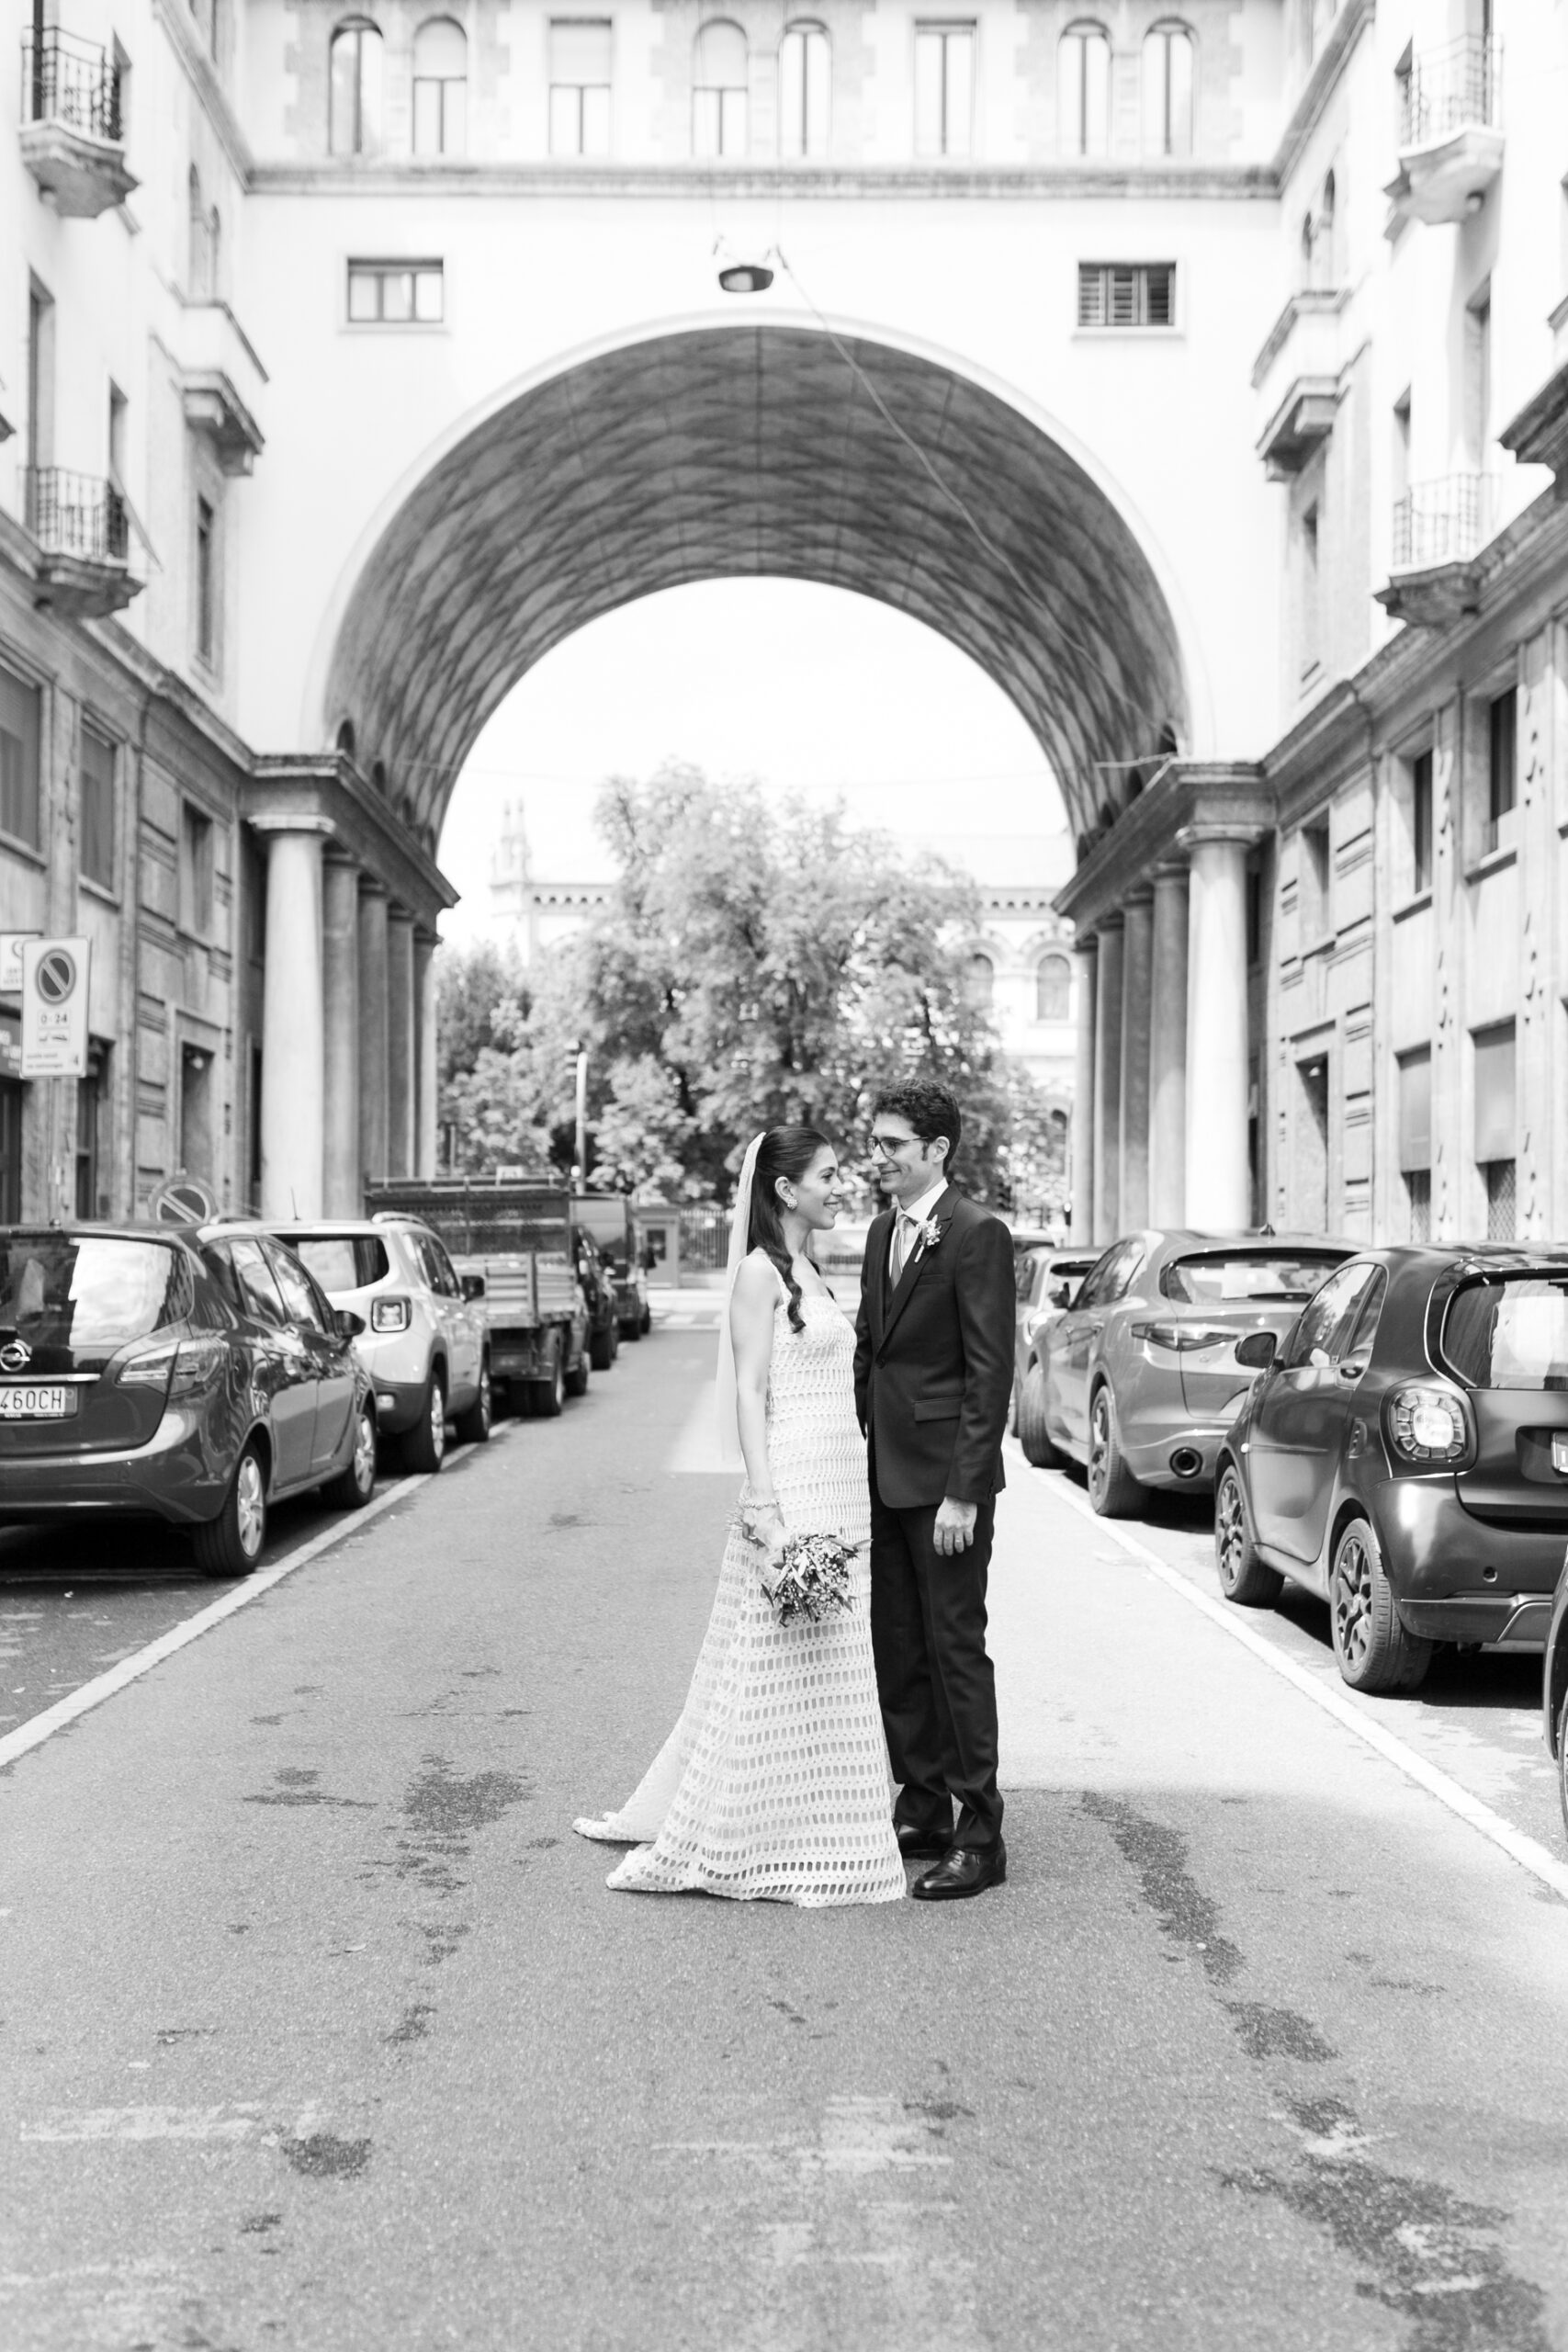 jessica enrico wedding matrimonio milano palazzo reale sposa bride sposo groom just married porta venezia street strada